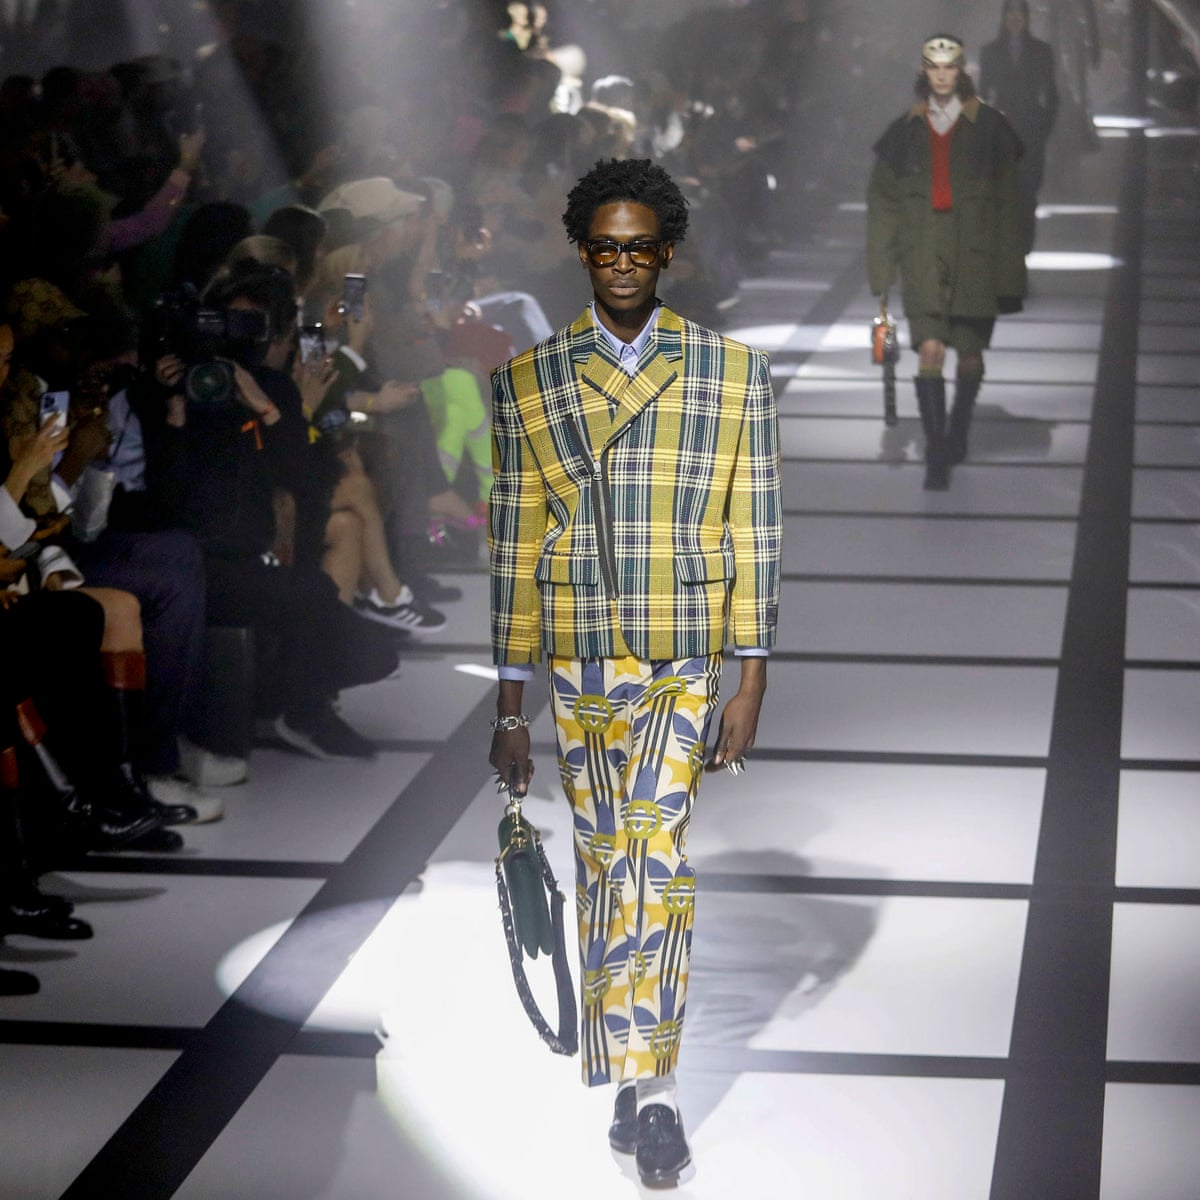 Milan Fashion Week: Inside Gucci's Fall/Winter 2019 Show – The